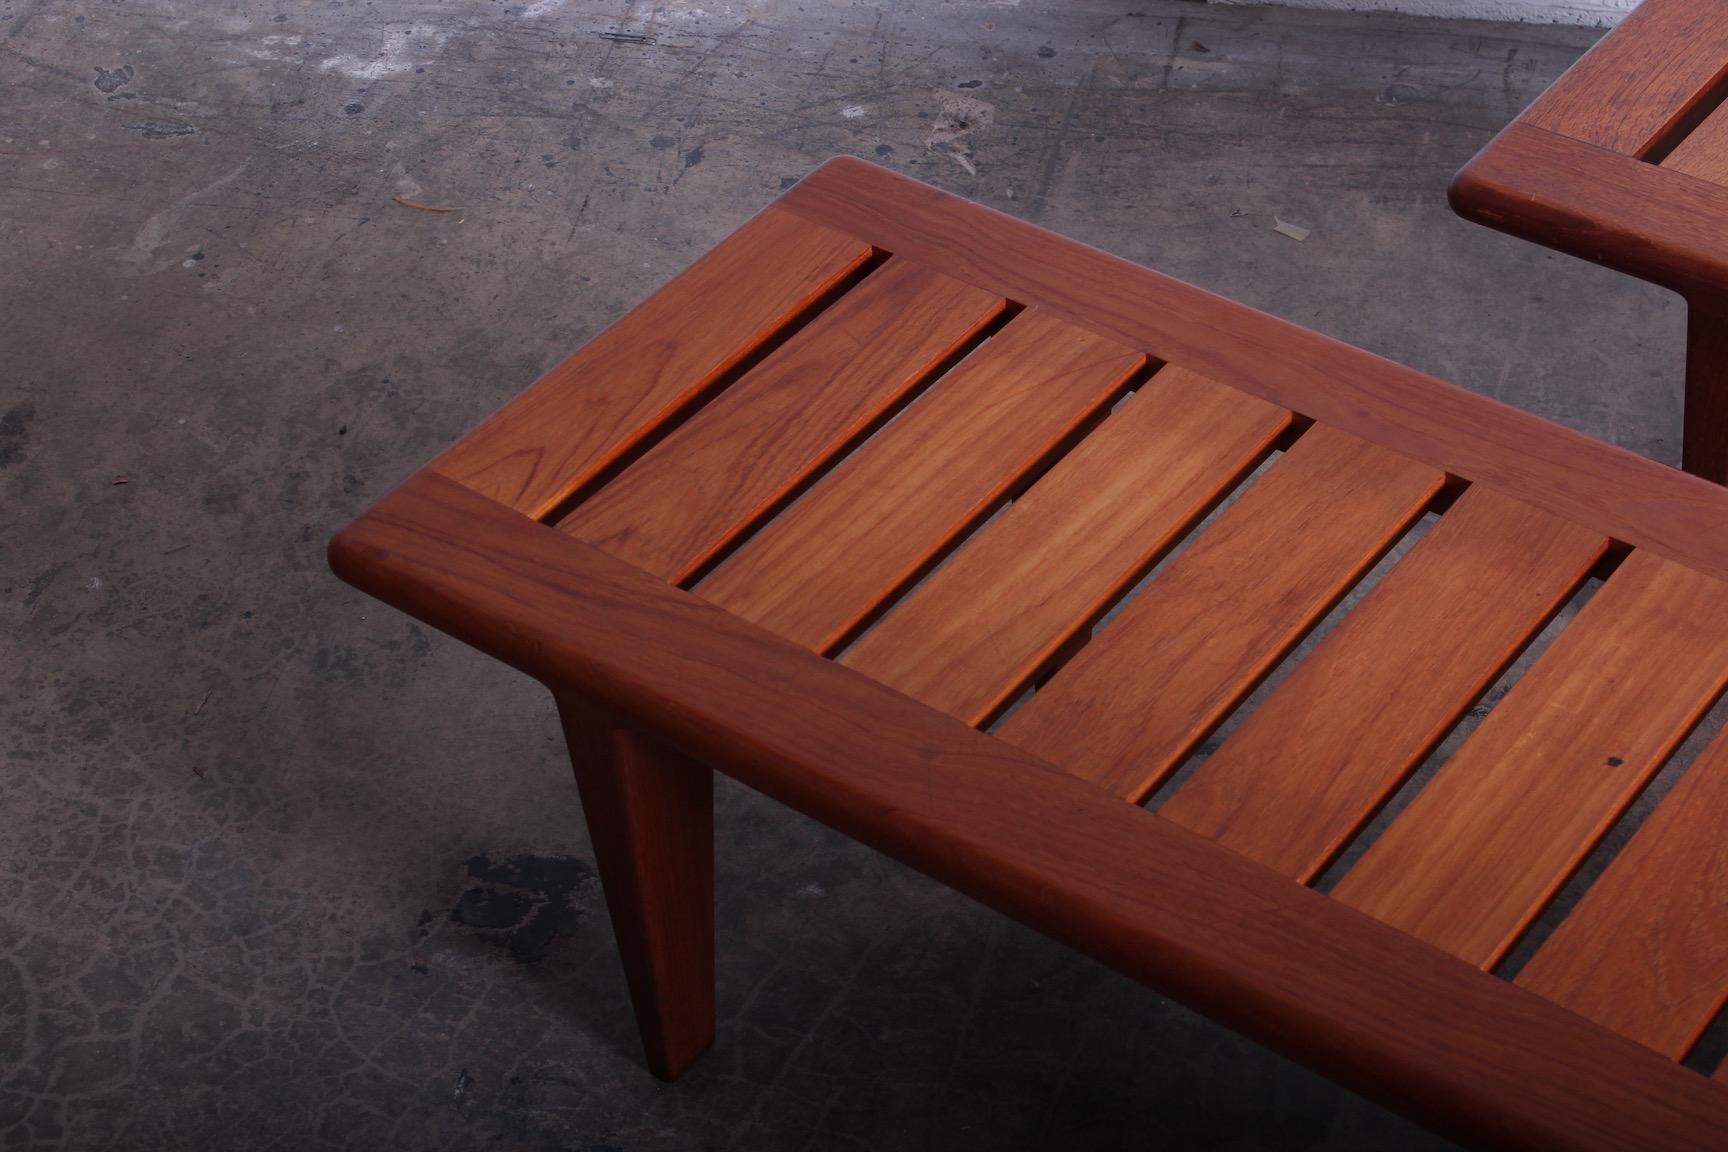 A pair of solid teak benches designed by Hans Wegner for Johannes Hansen.